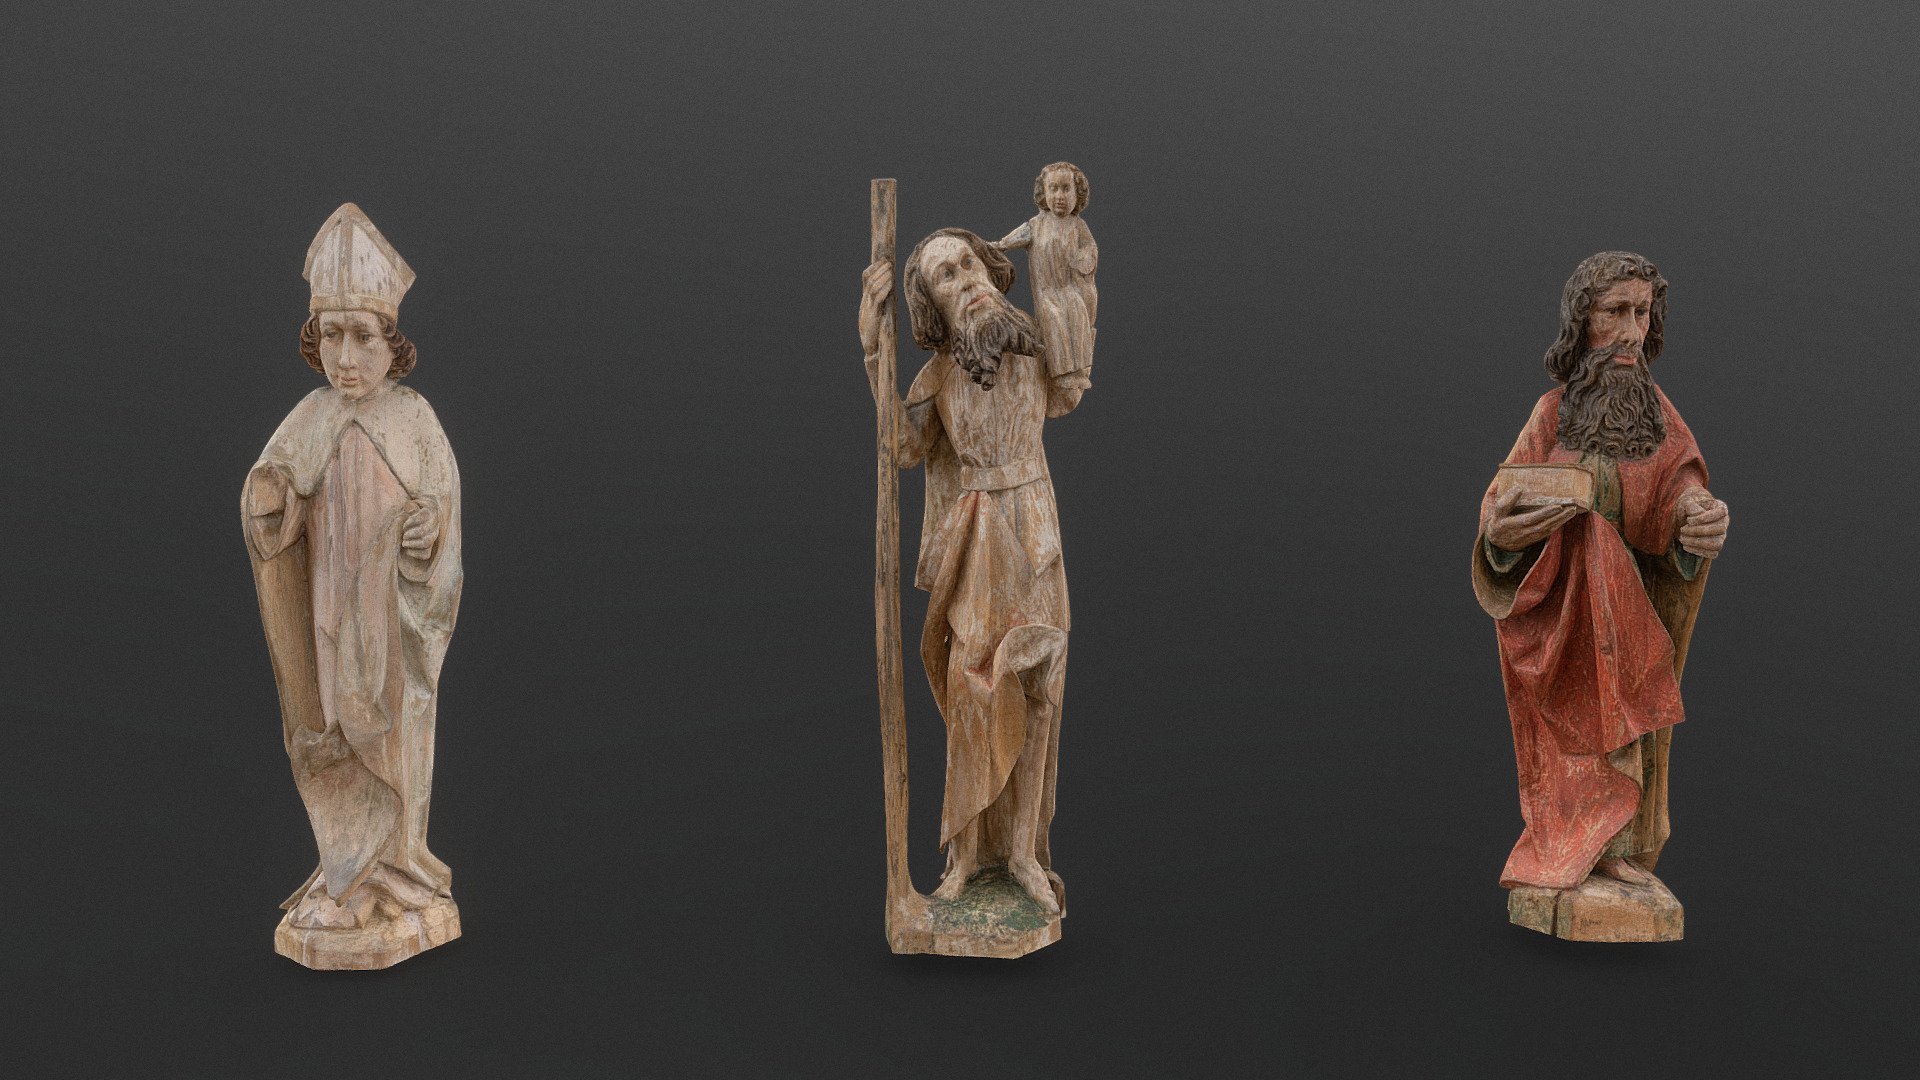 Teplice (CZ) - Furstenau (DE) church Altar wooden baroque statuettes set of saints - Altar statues - 3D model by matousekfoto 3d model